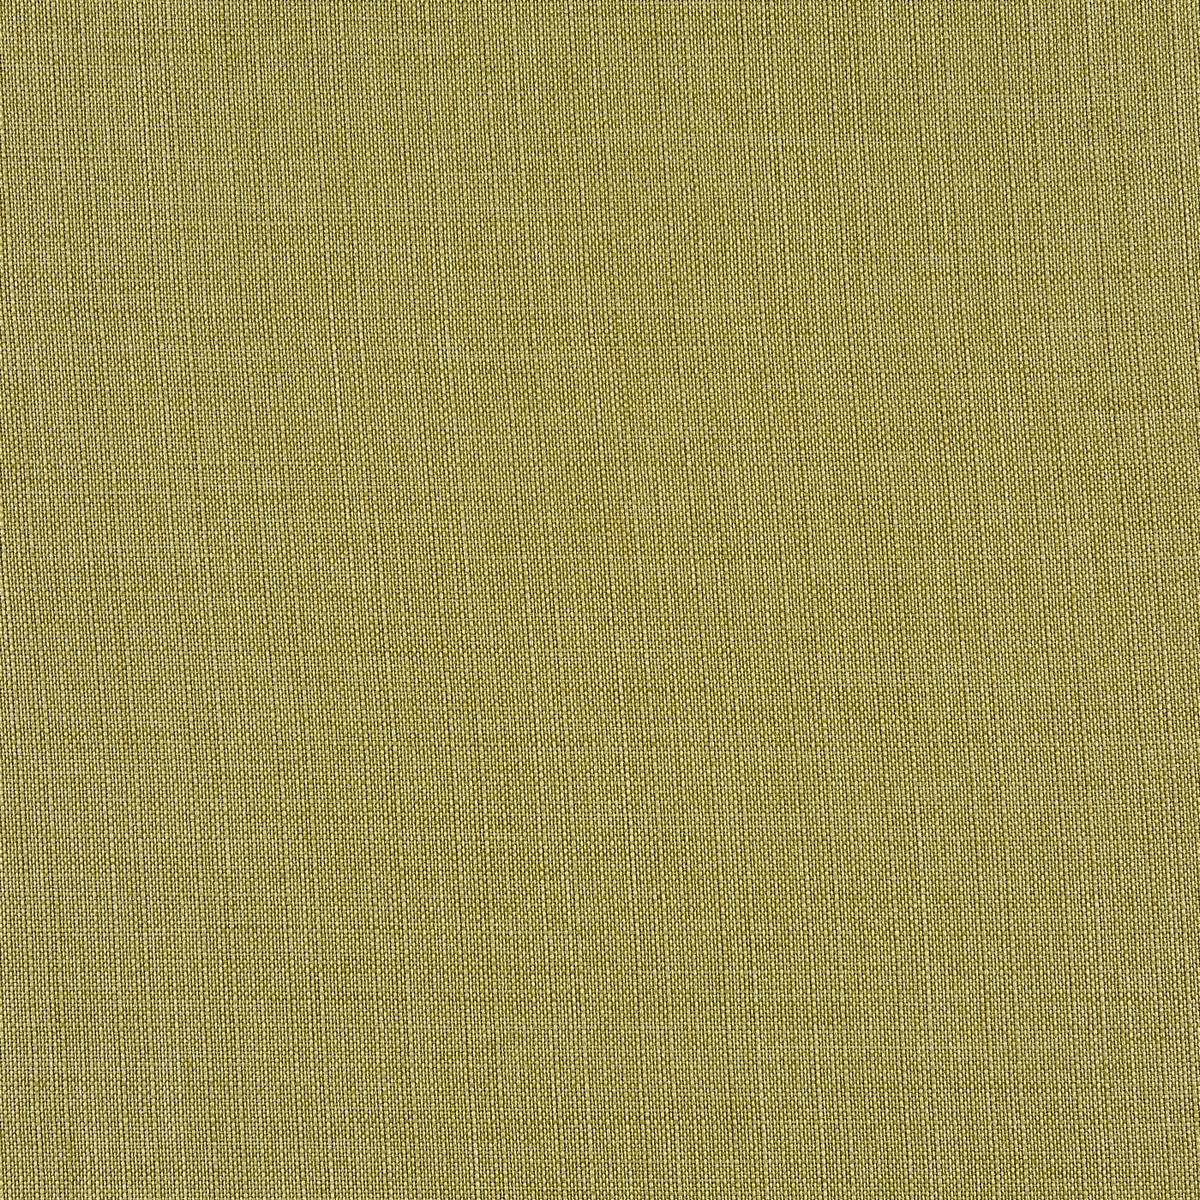 Franklin Olive Fabric by Prestigious Textiles